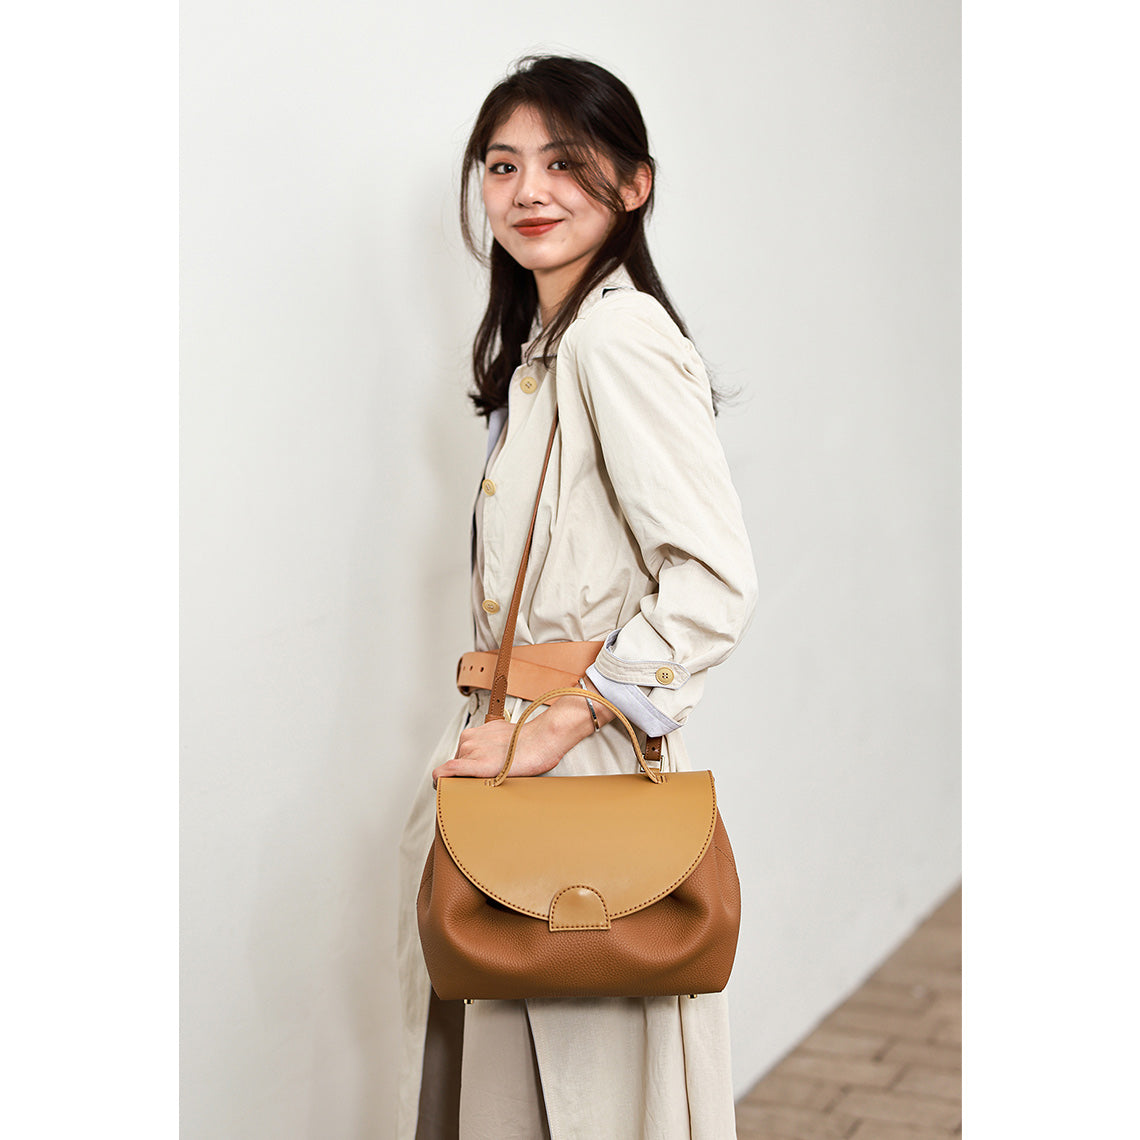 DIY Polene Brown Bag | DIY Handbag Kit